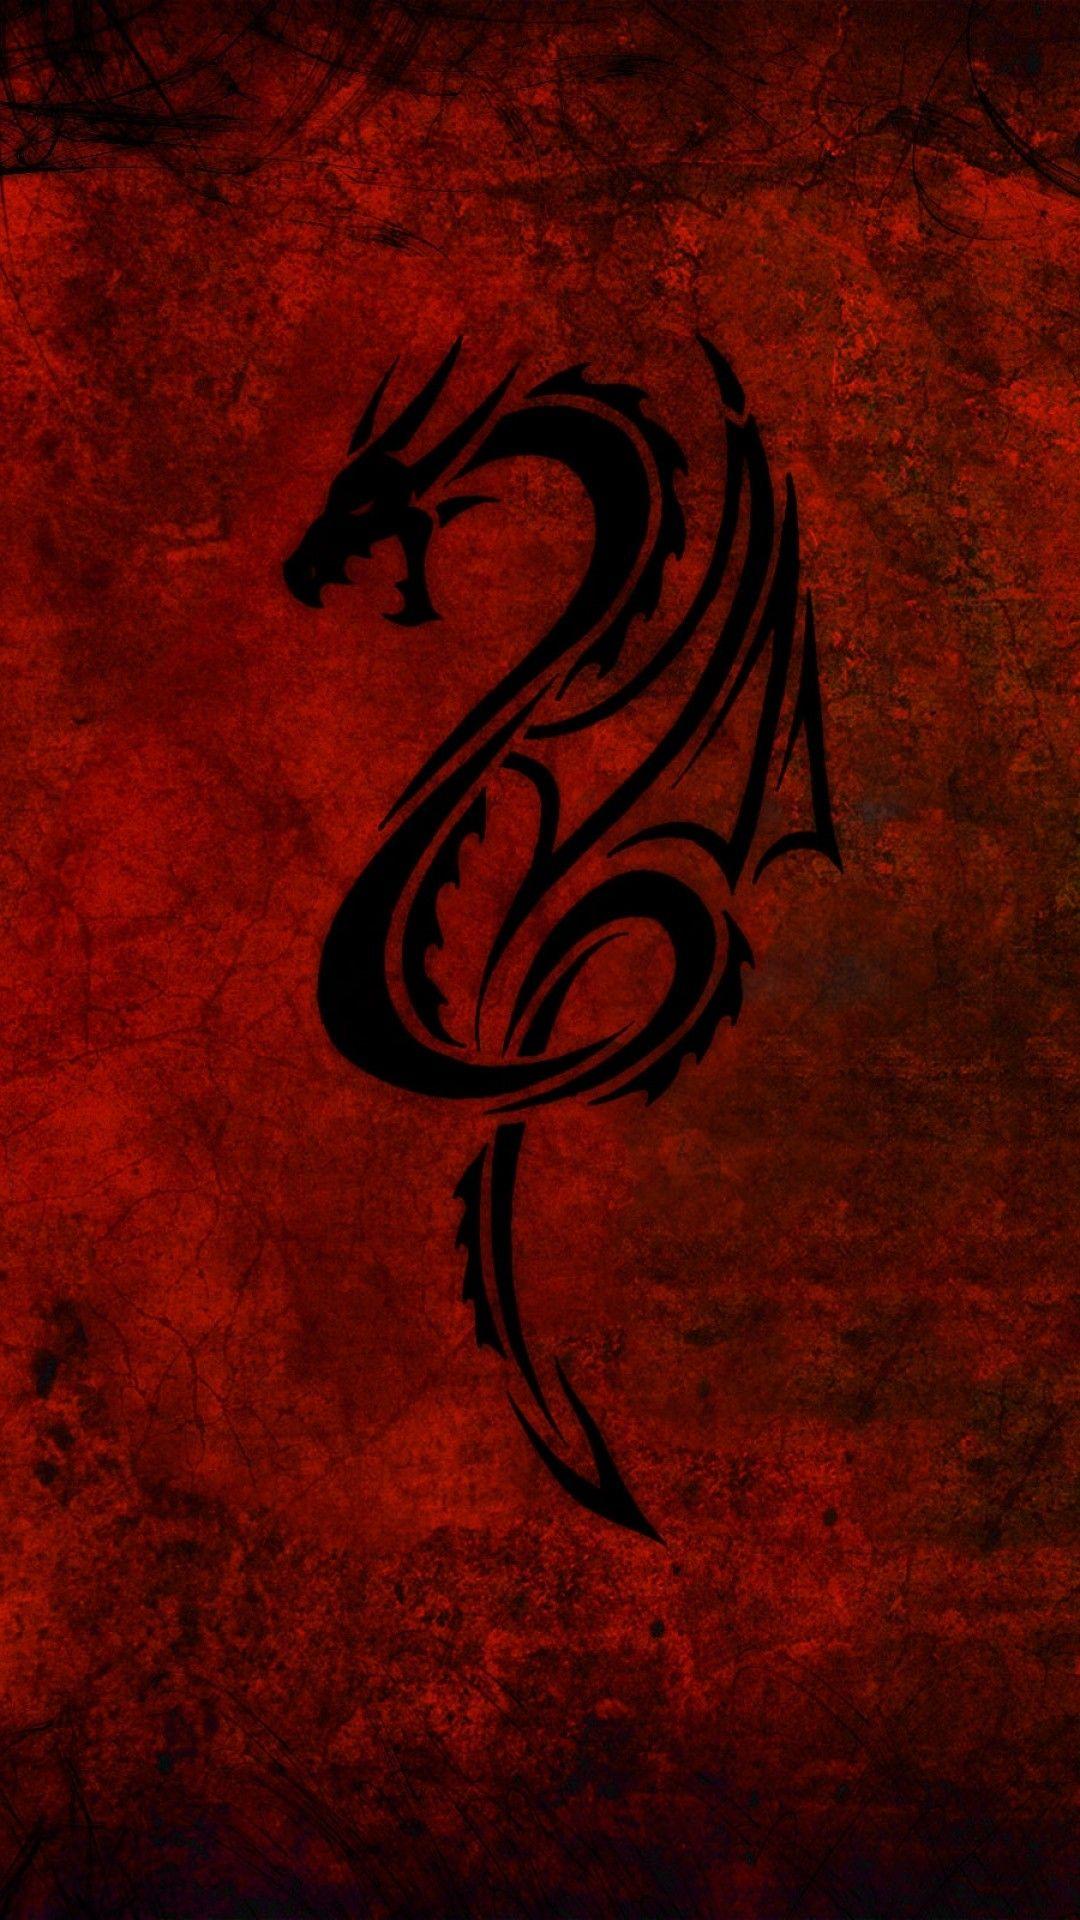 Red Dragon Wallpaper